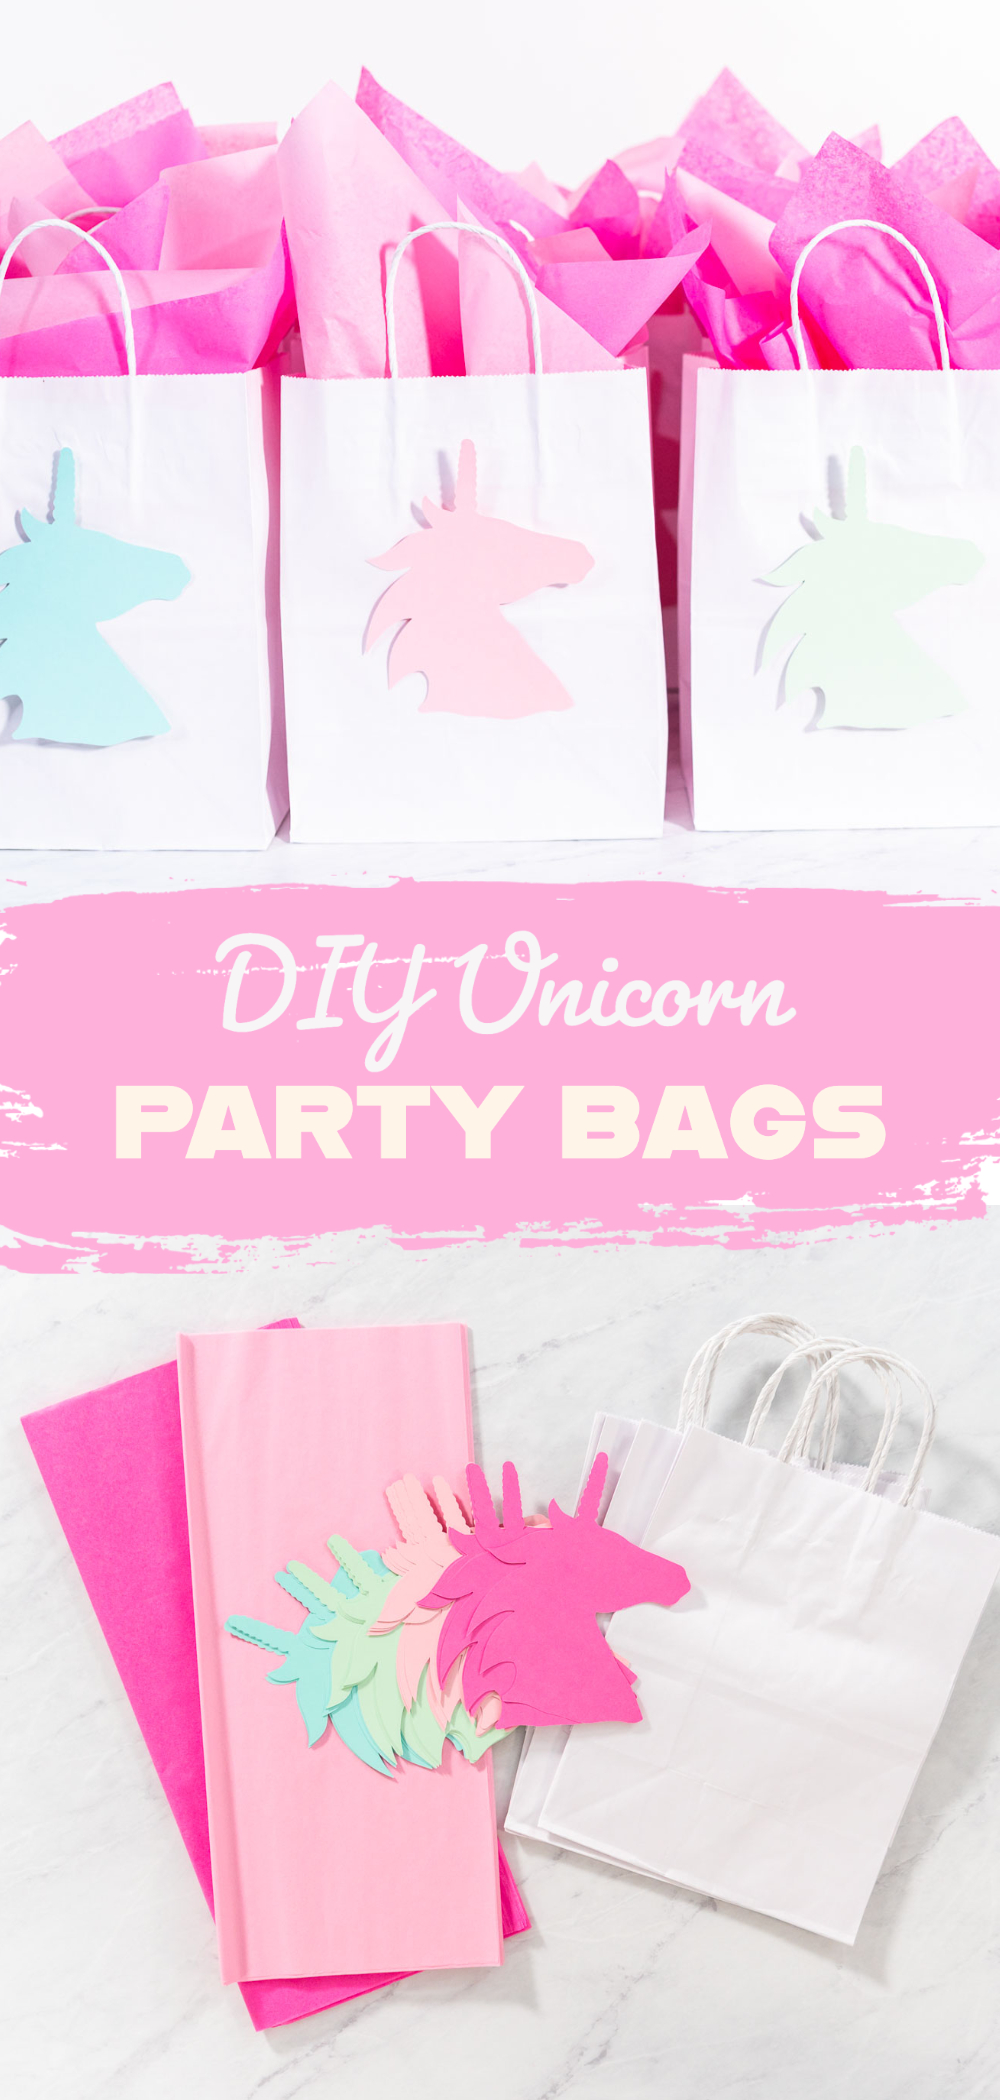 DIY Unicorn party bags